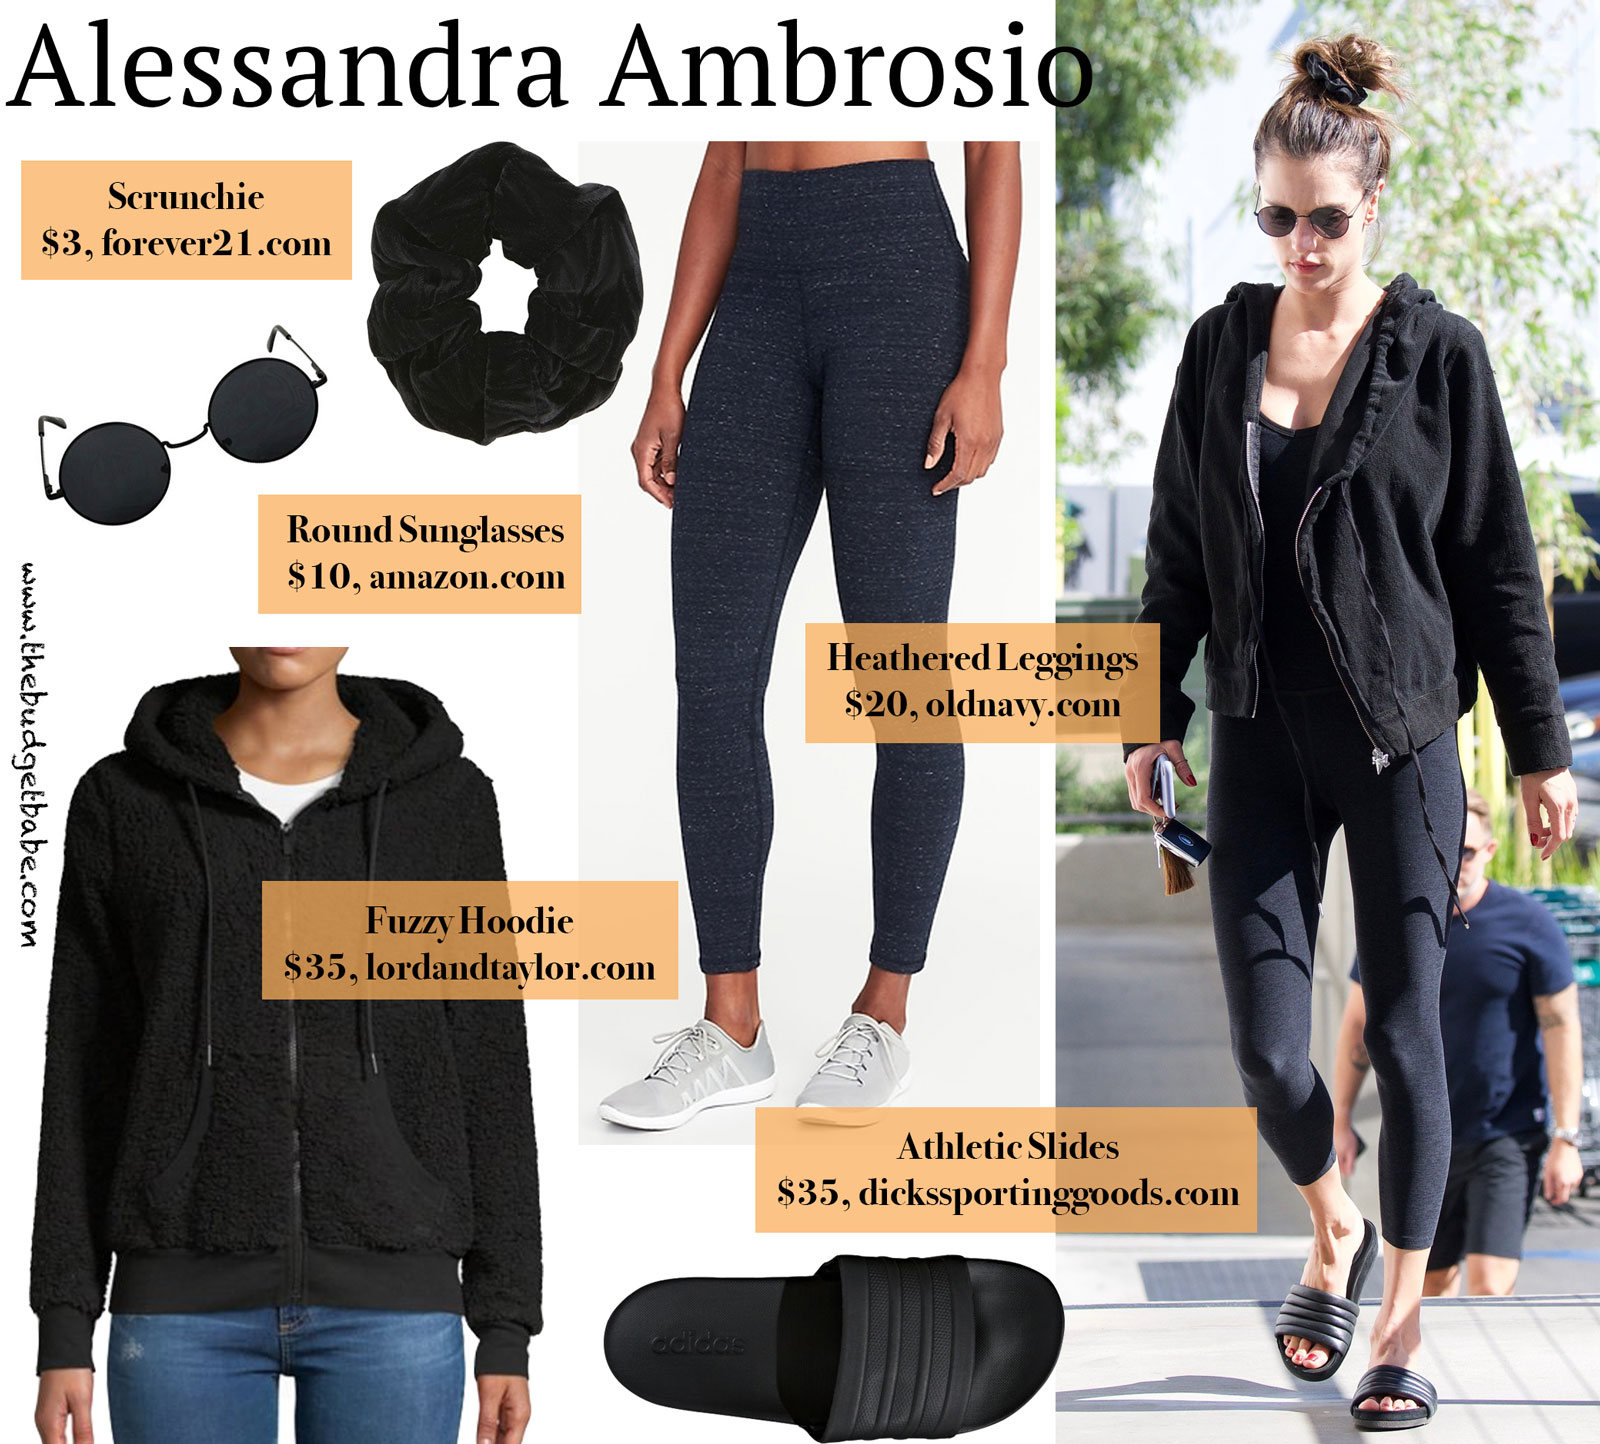 Alessandra Ambrosio Hoodie and Leggings